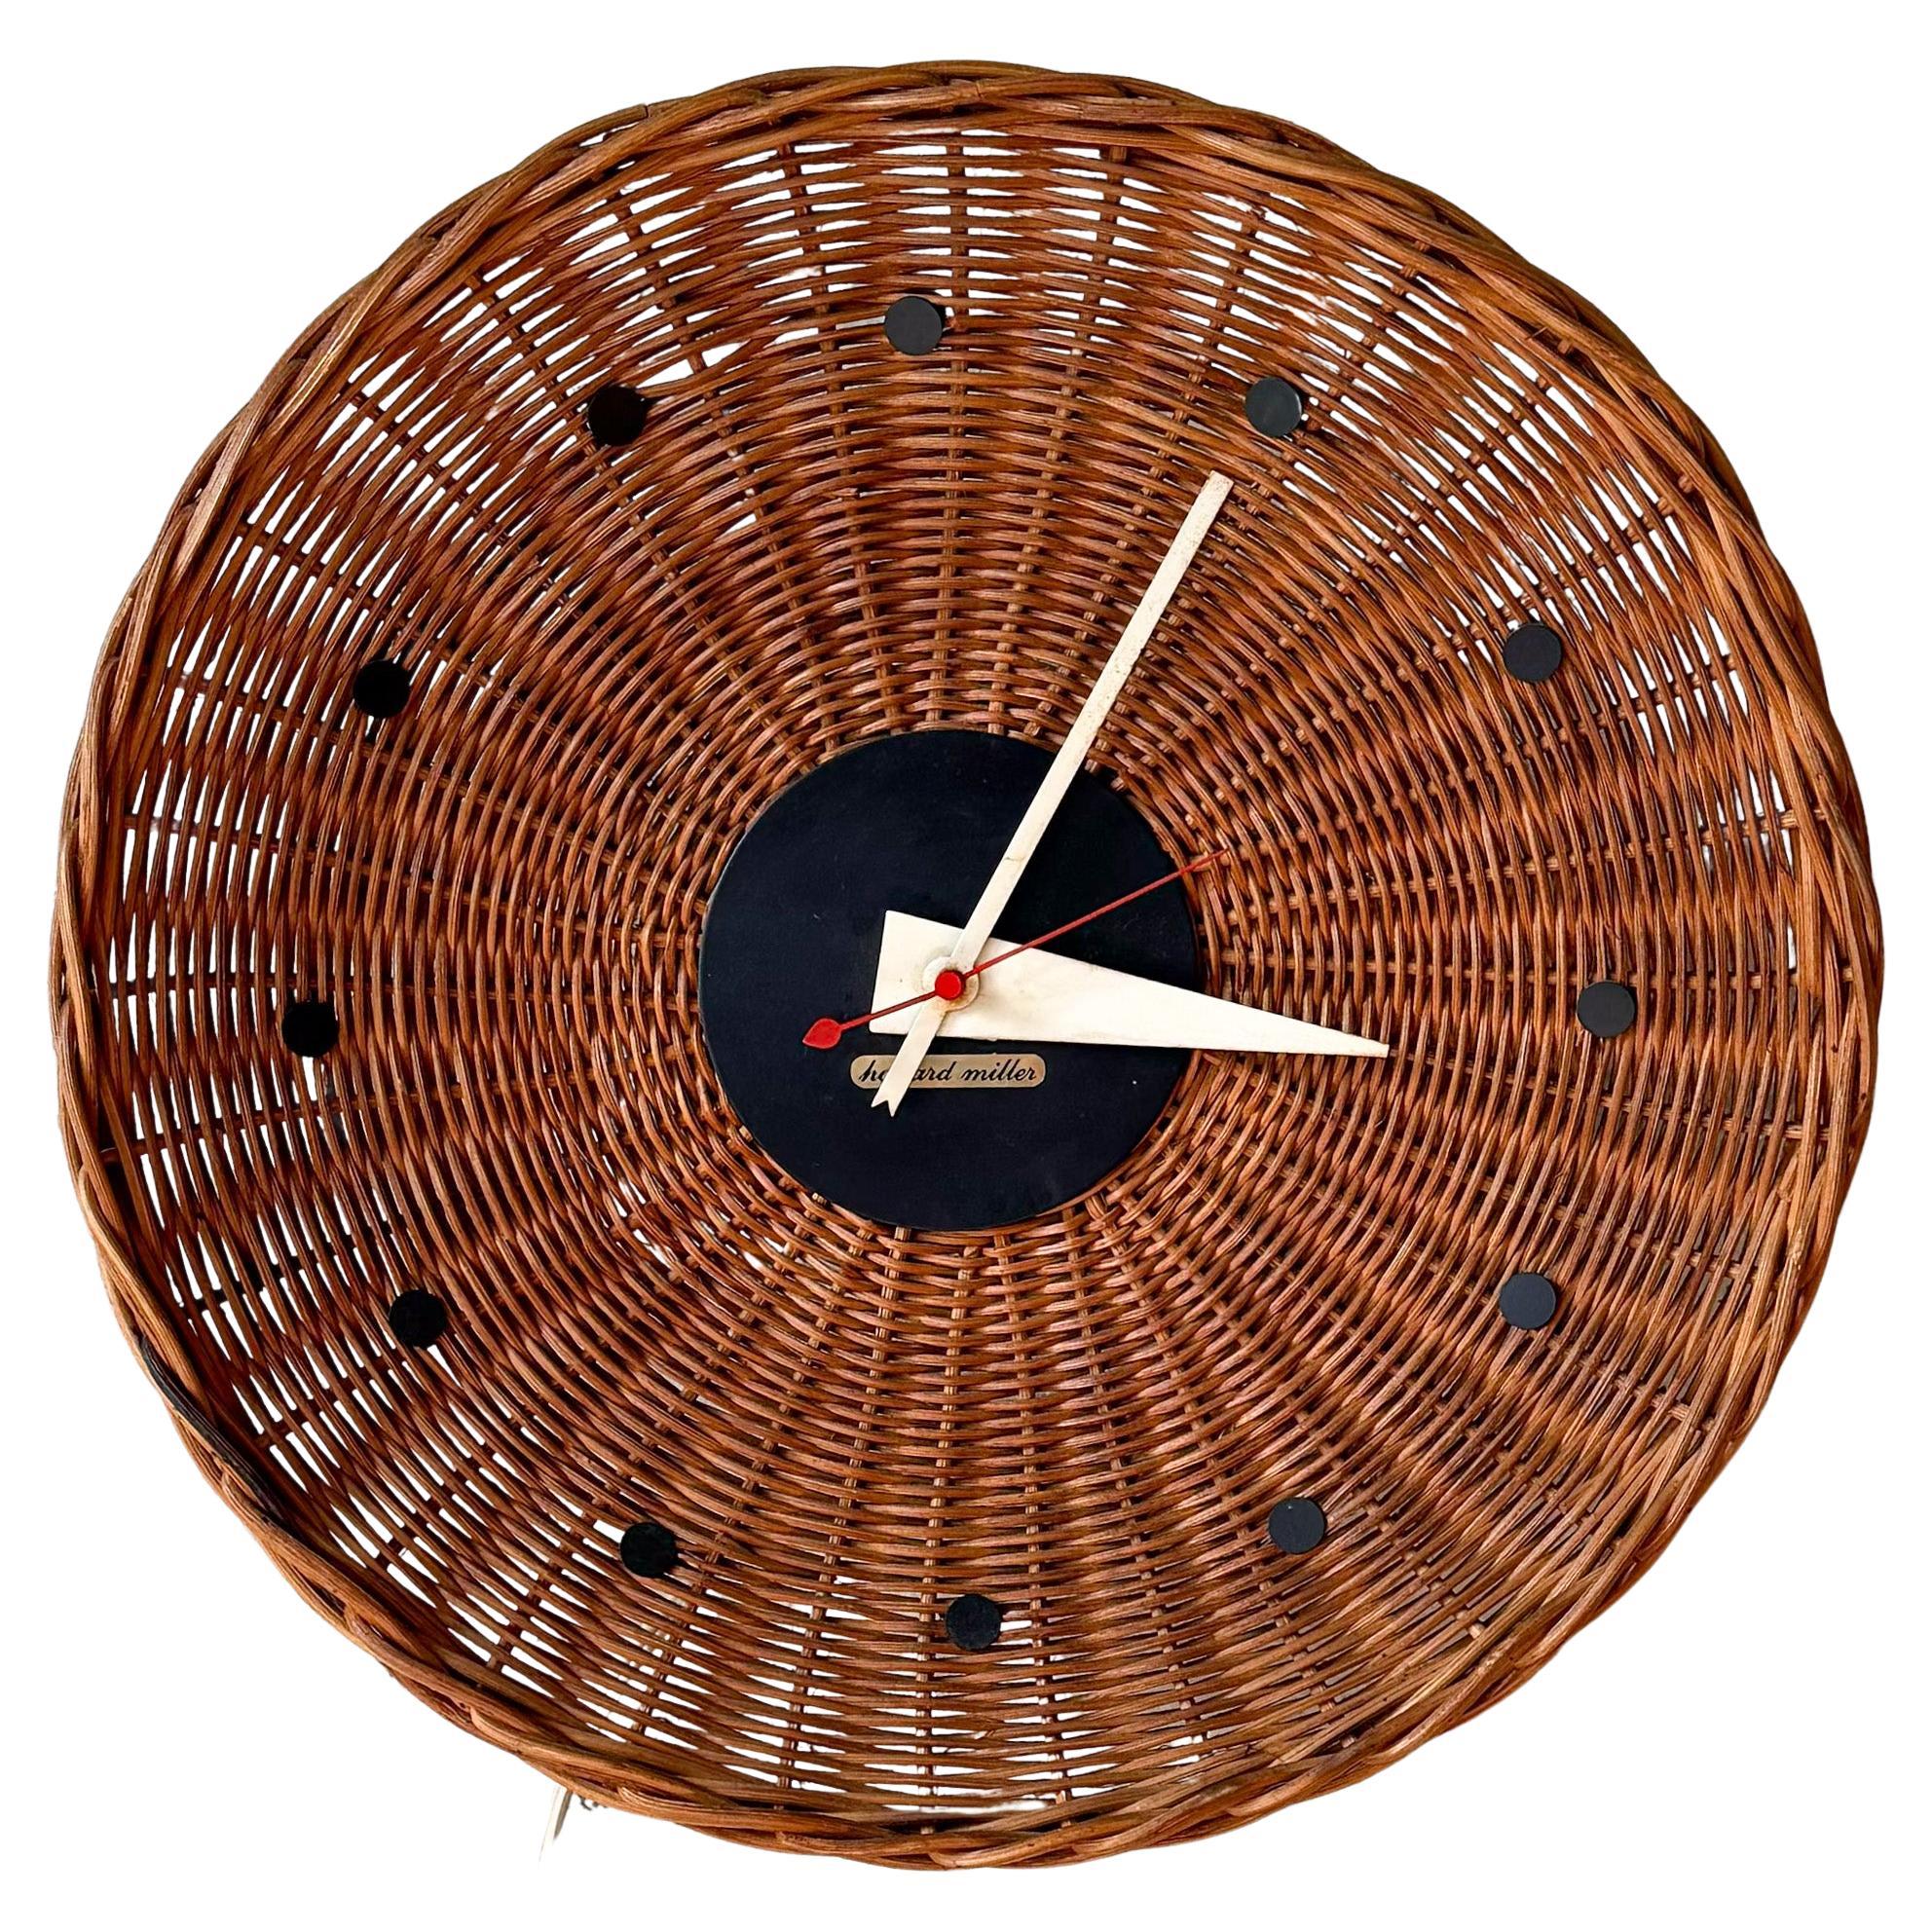 George Nelson Basket Clock, model 2215 For Sale